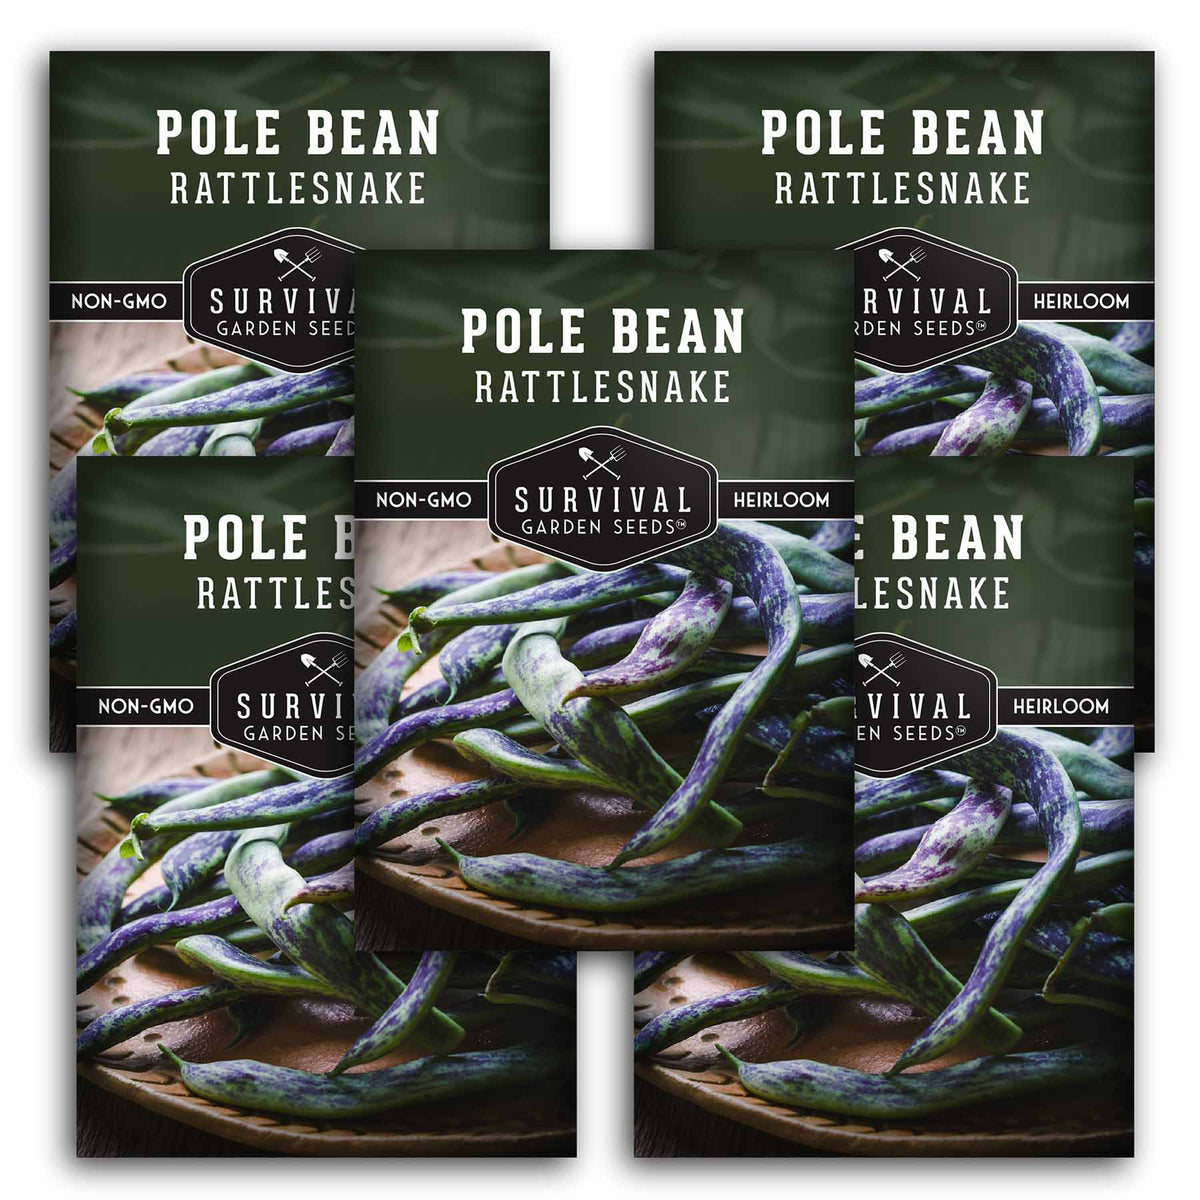 5 packets of Rattlesnake Pole Bean seeds